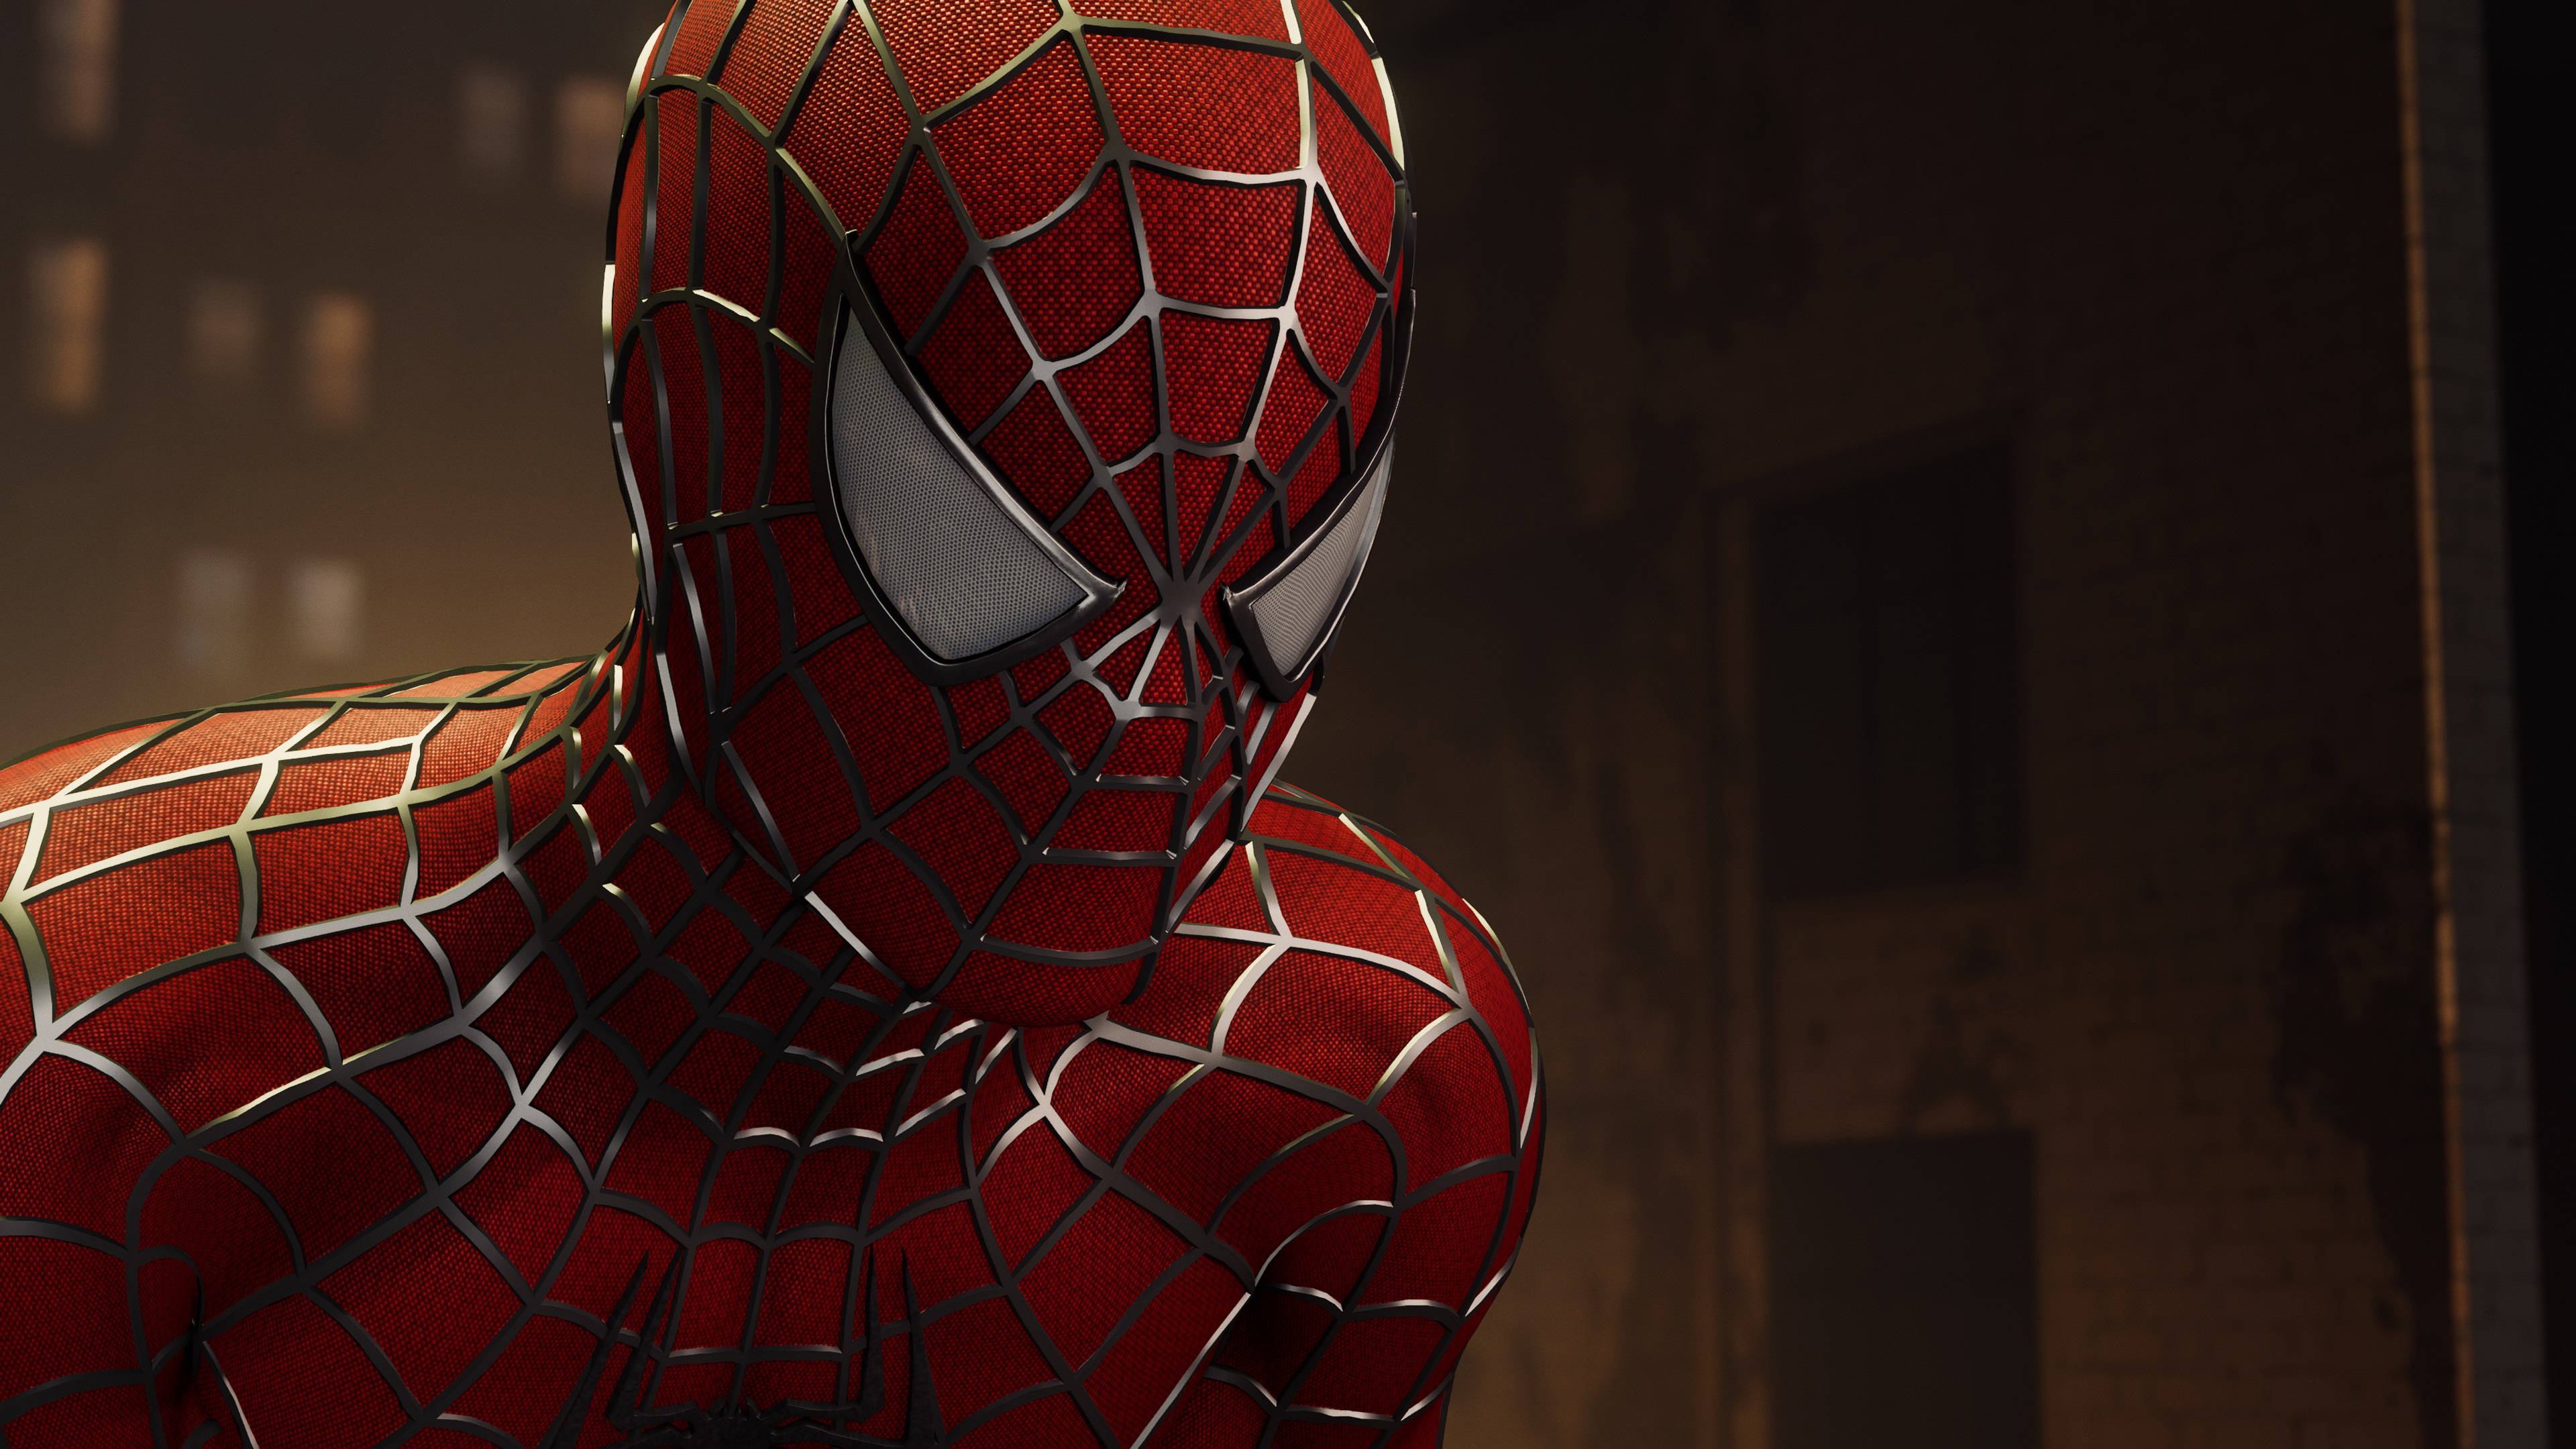  Spider  Man  4k  Ultra HD Wallpaper  Background Image 